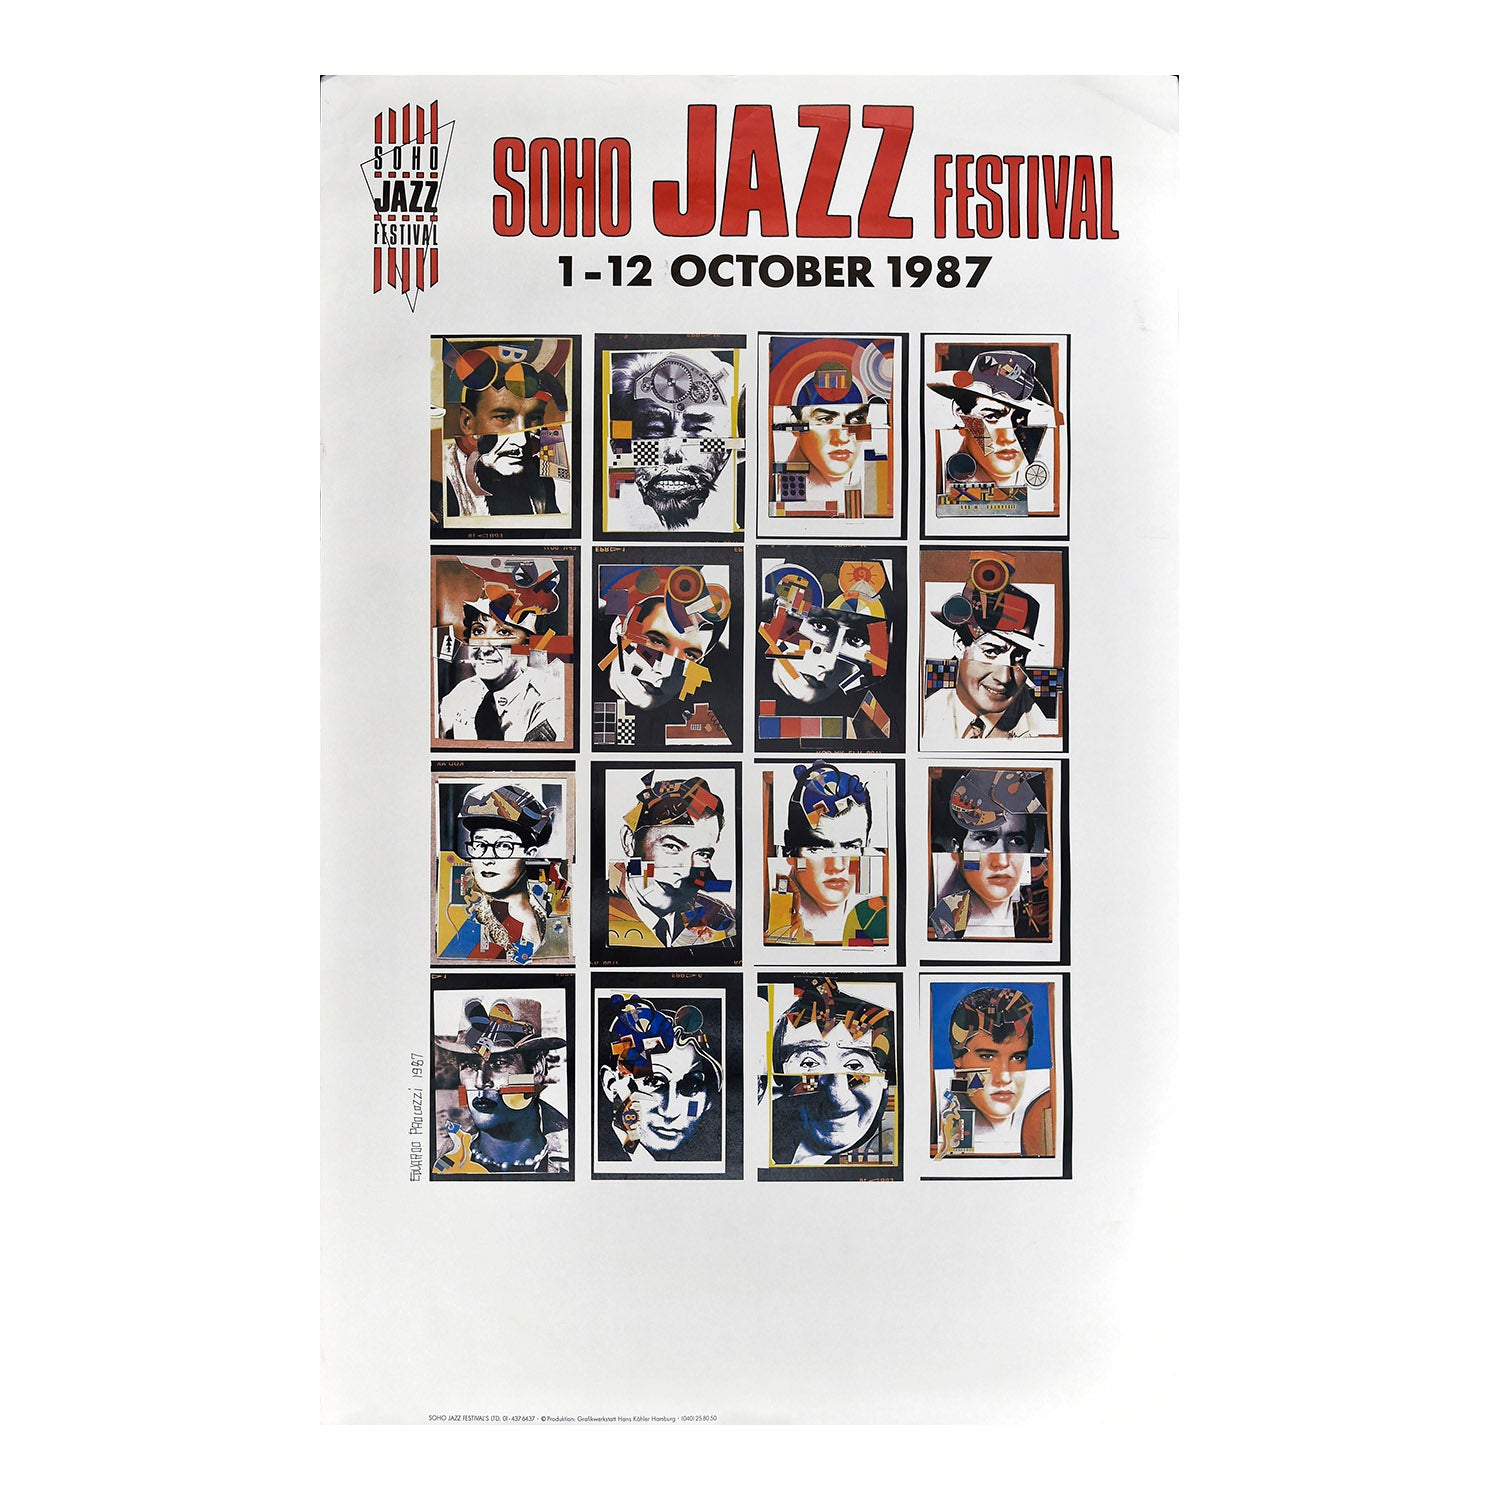 An original poster for the 1987 Soho Jazz Festival designed by the ‘godfather’ of pop art, Eduardo Paolozzi.